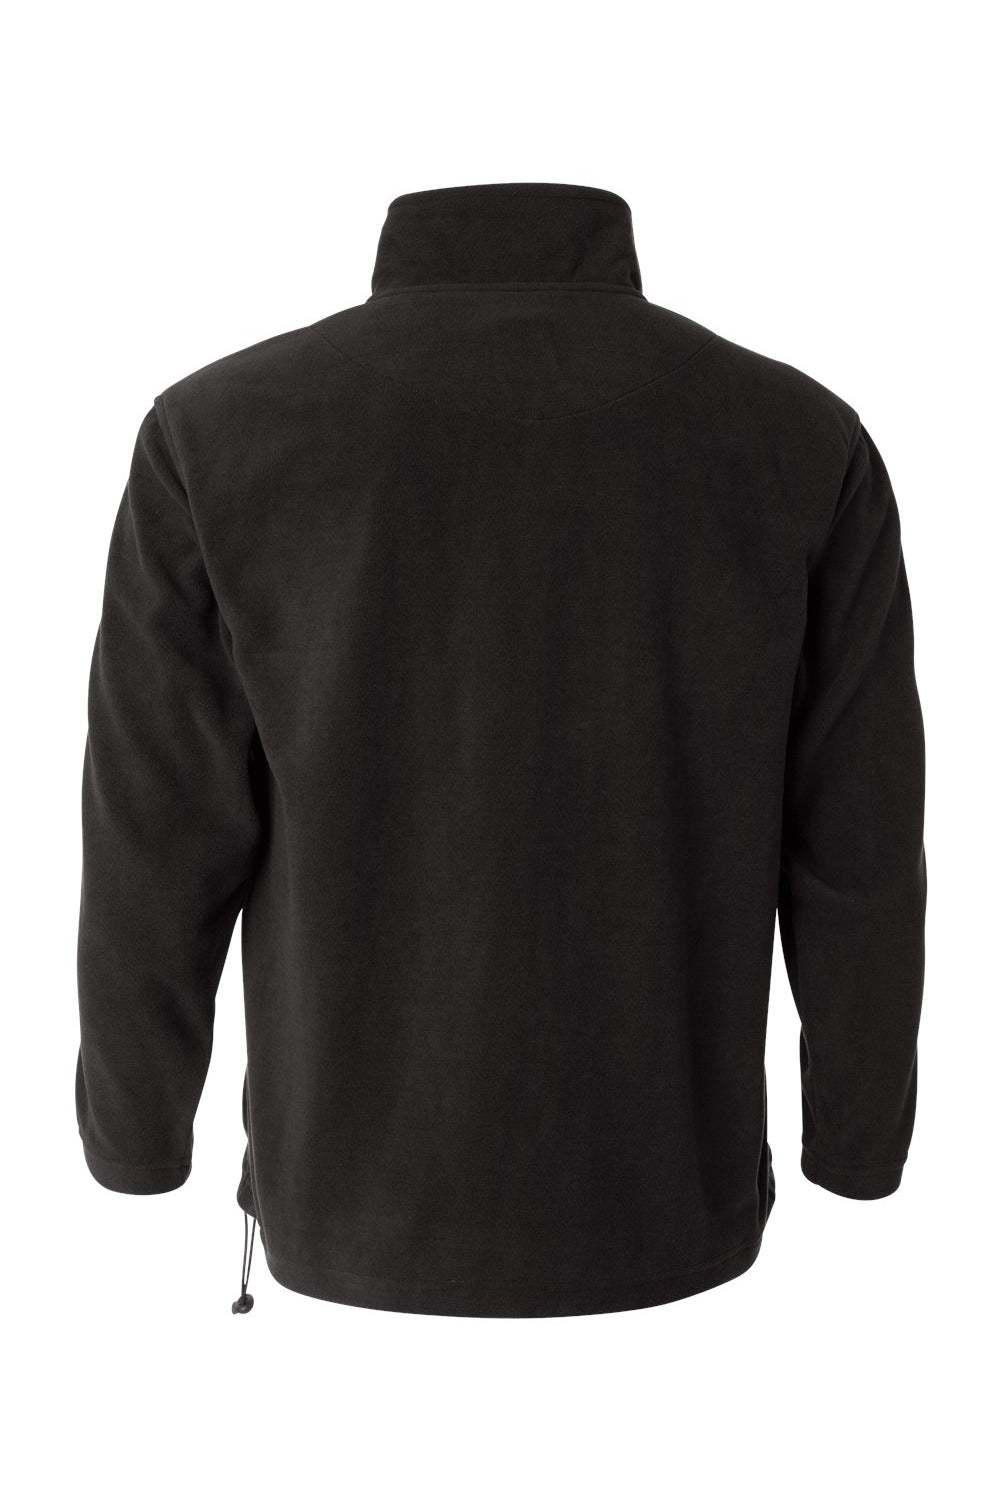 Sierra Pacific 3351 Mens Microfleece 1/4 Zip Sweatshirt Onyx Black Flat Back